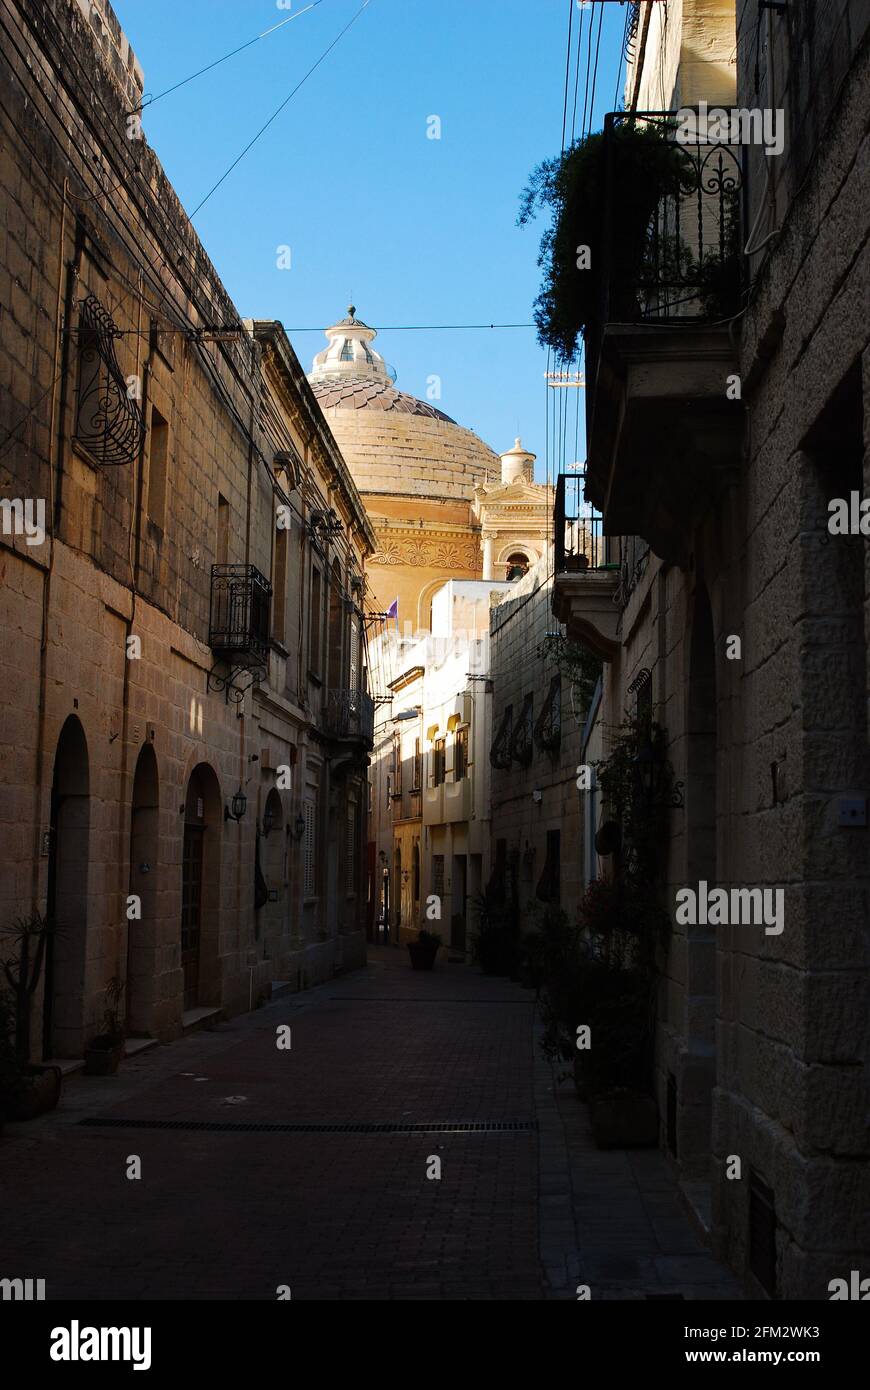 The street view on the famous Mosta Rotunda of Saint Maria Assunta in Maltese city Mosta Stock Photo